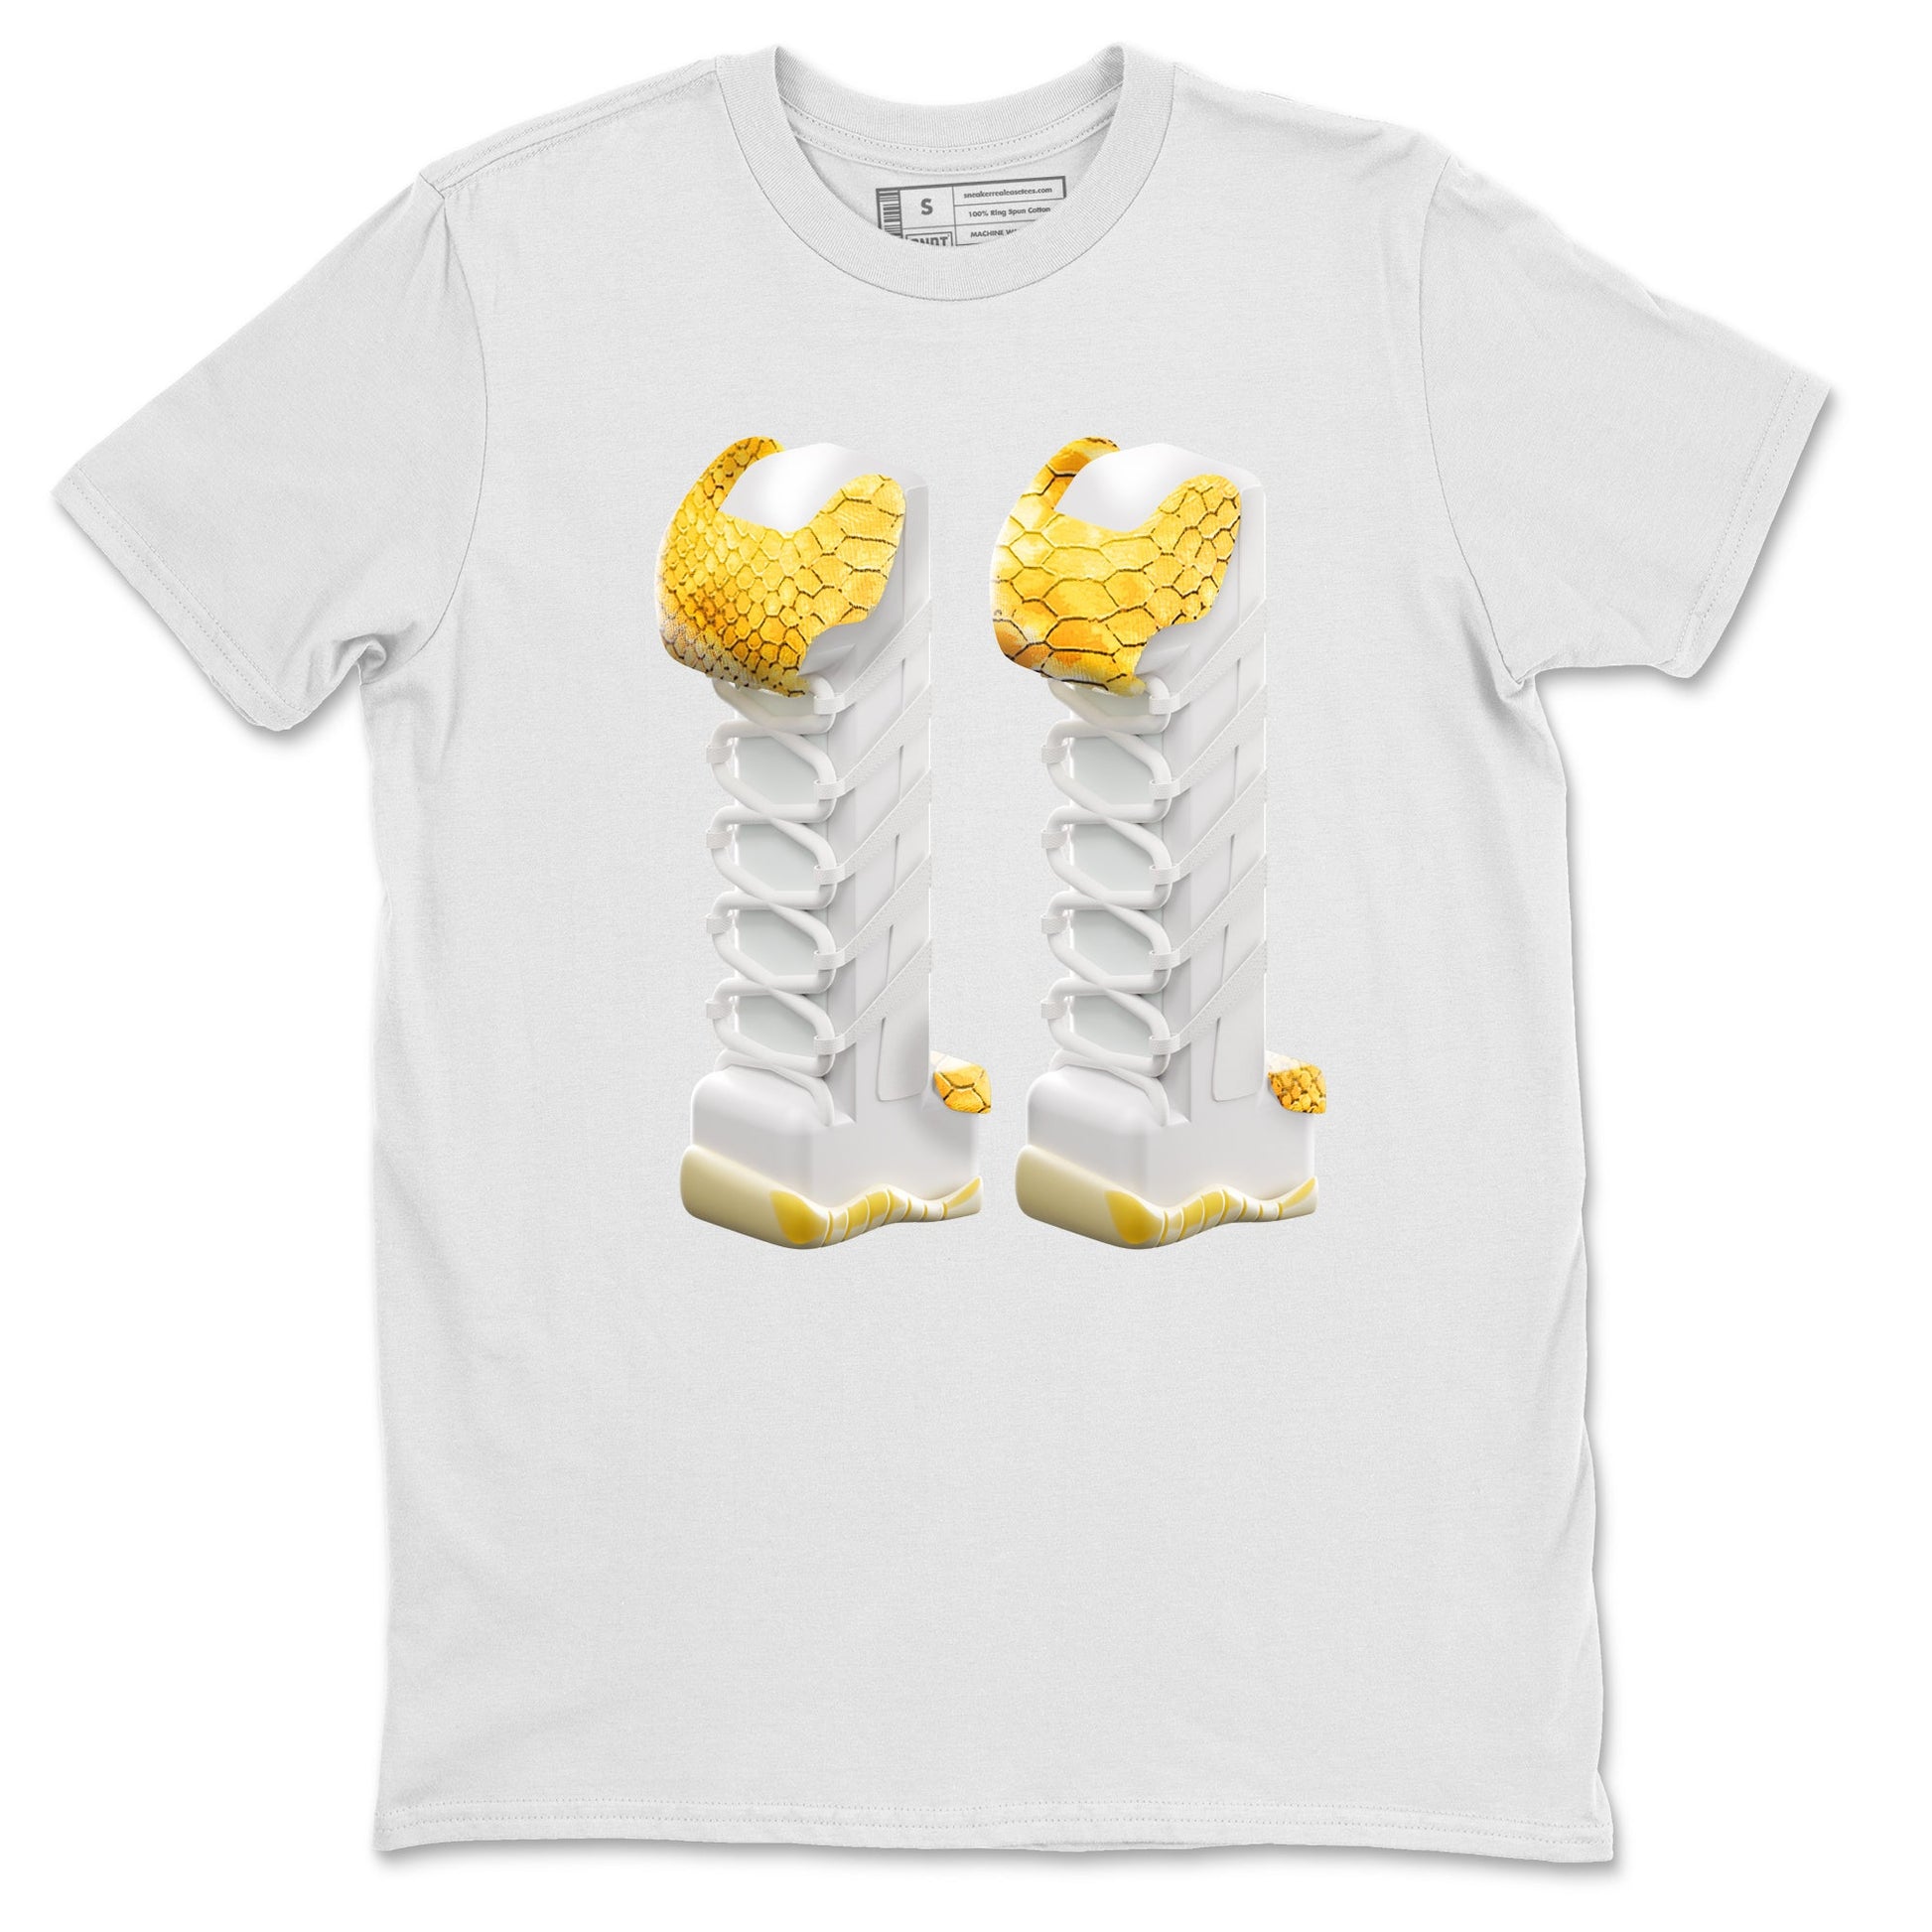 Air Jordan 11 WMNS Yellow Python, Heart Break Kids Shirts